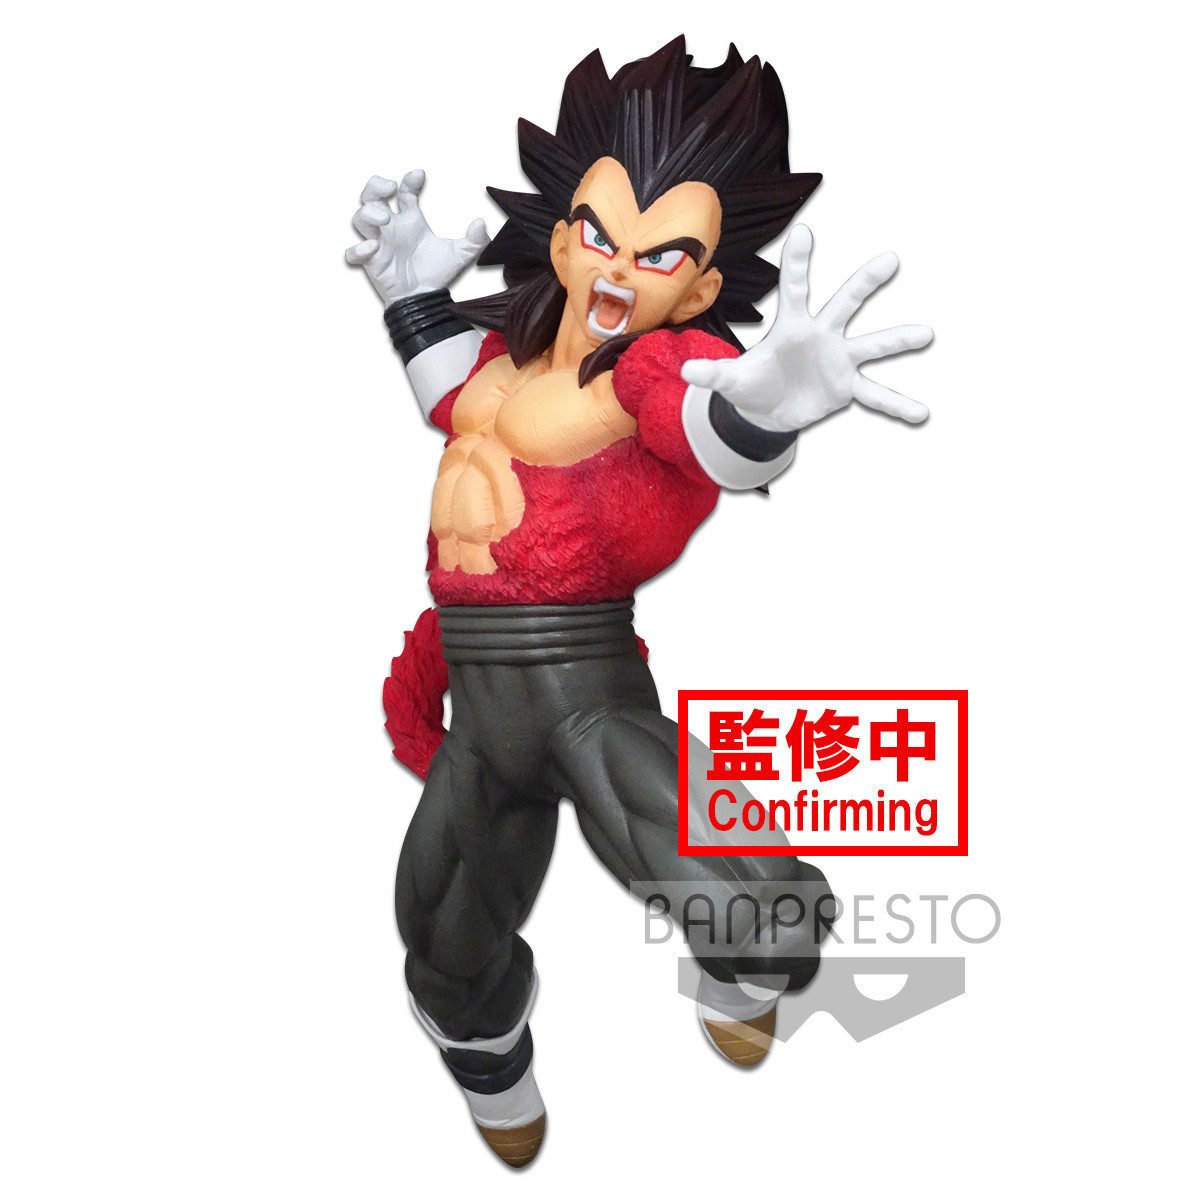 BANPRESTO Dragon Ball Heroes 9th Anniversary Ss4 Vegeta XENO Figure N for sale online 